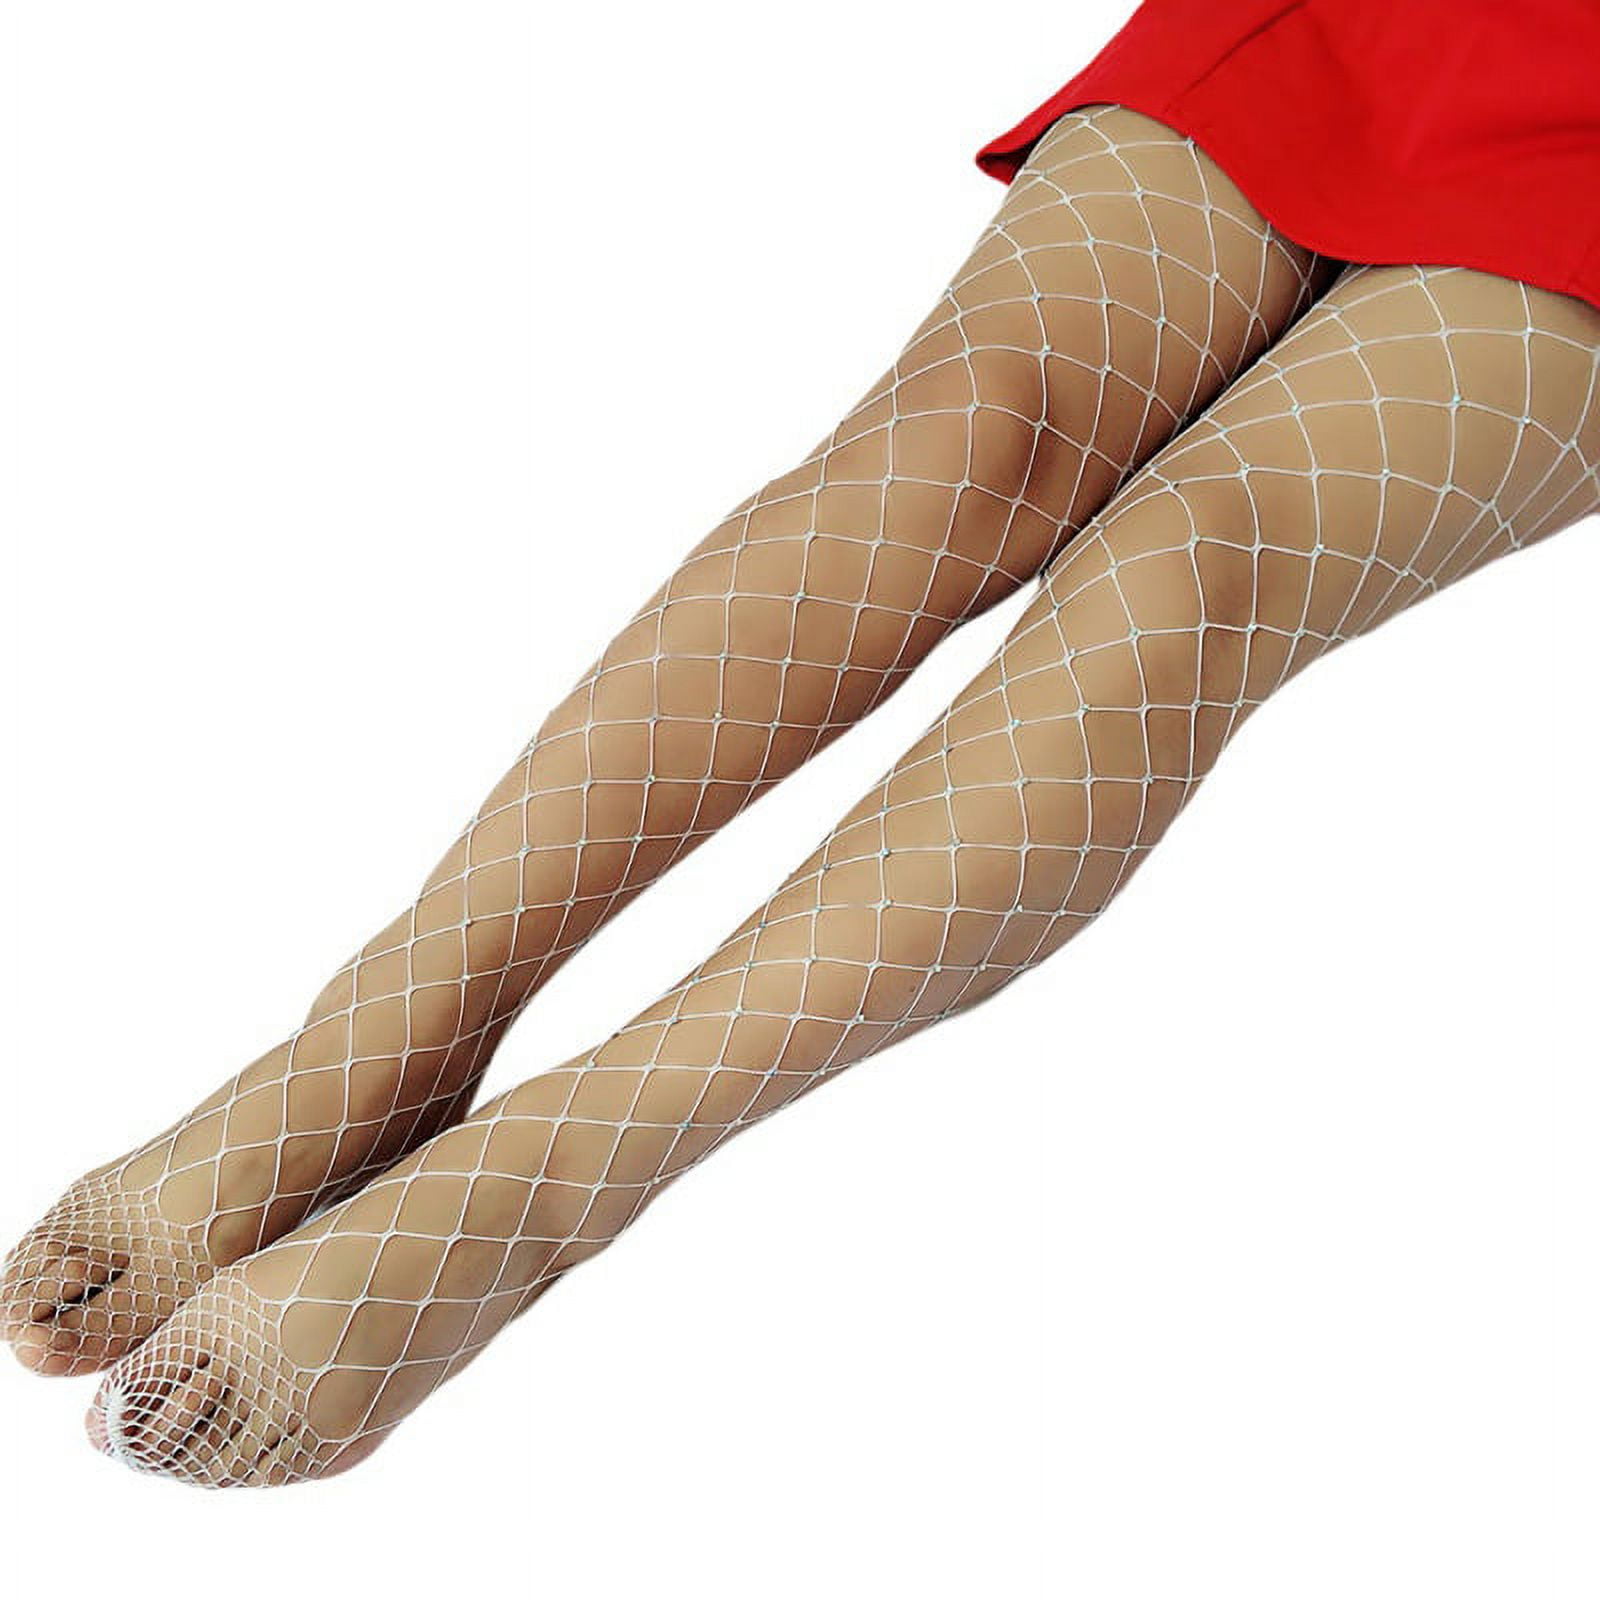 Max Women Sexy Hollow Fishnet Stockings Net Mesh Pantyhose Tights Socks  White, Lingerie Stockings, Fishnet Stockings, Lace Stockings, स्टॉकिंगस -  Aladdin Shoppers, New Delhi | ID: 2852979784497